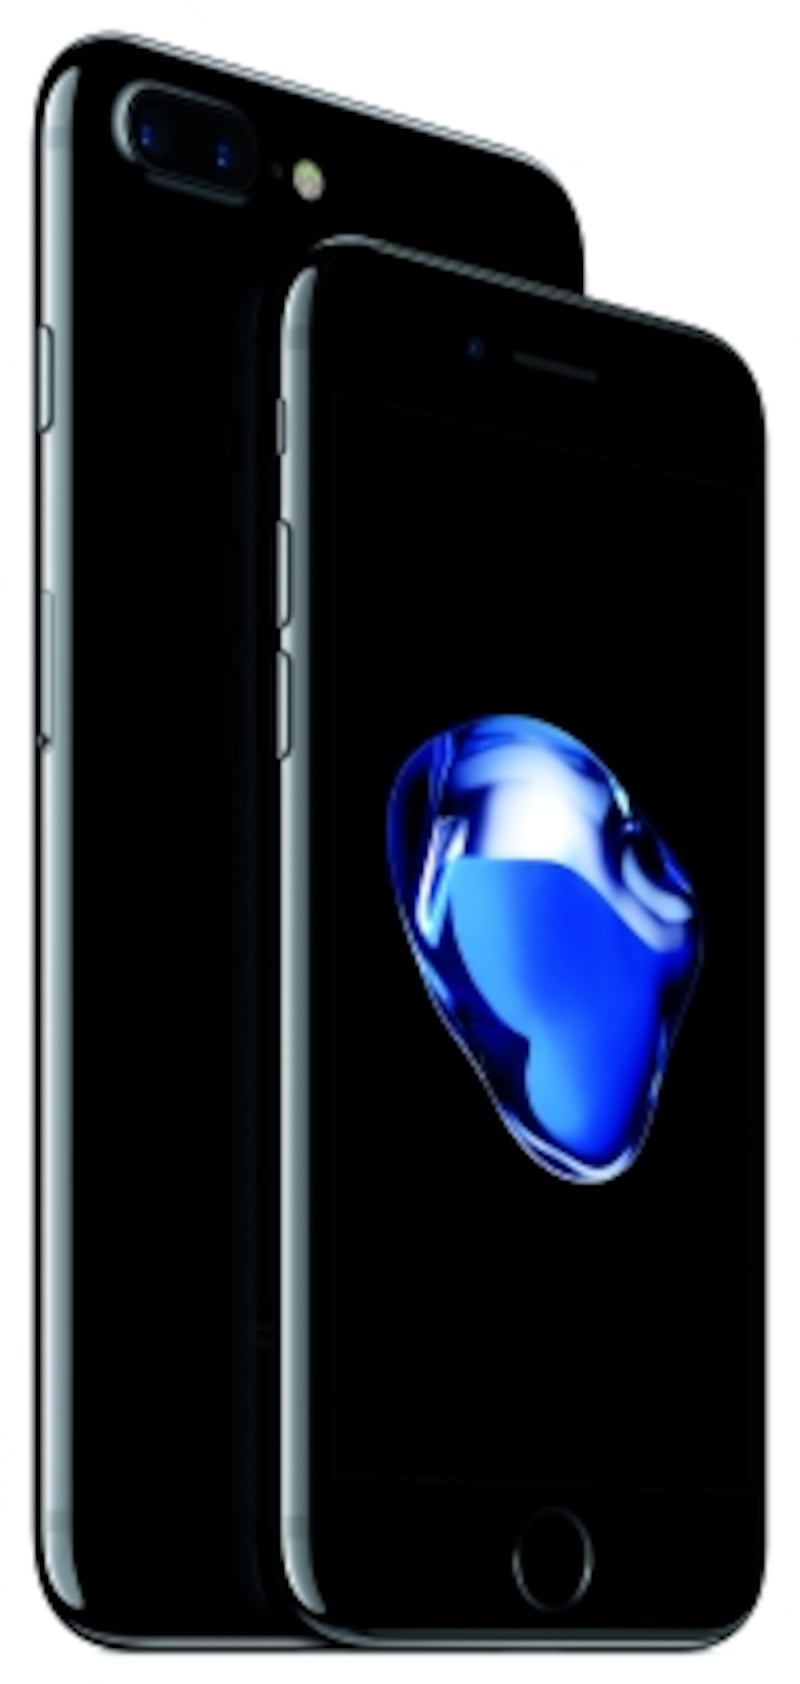 iPhone 7/7 Plusが発表された。発売は9月16日から